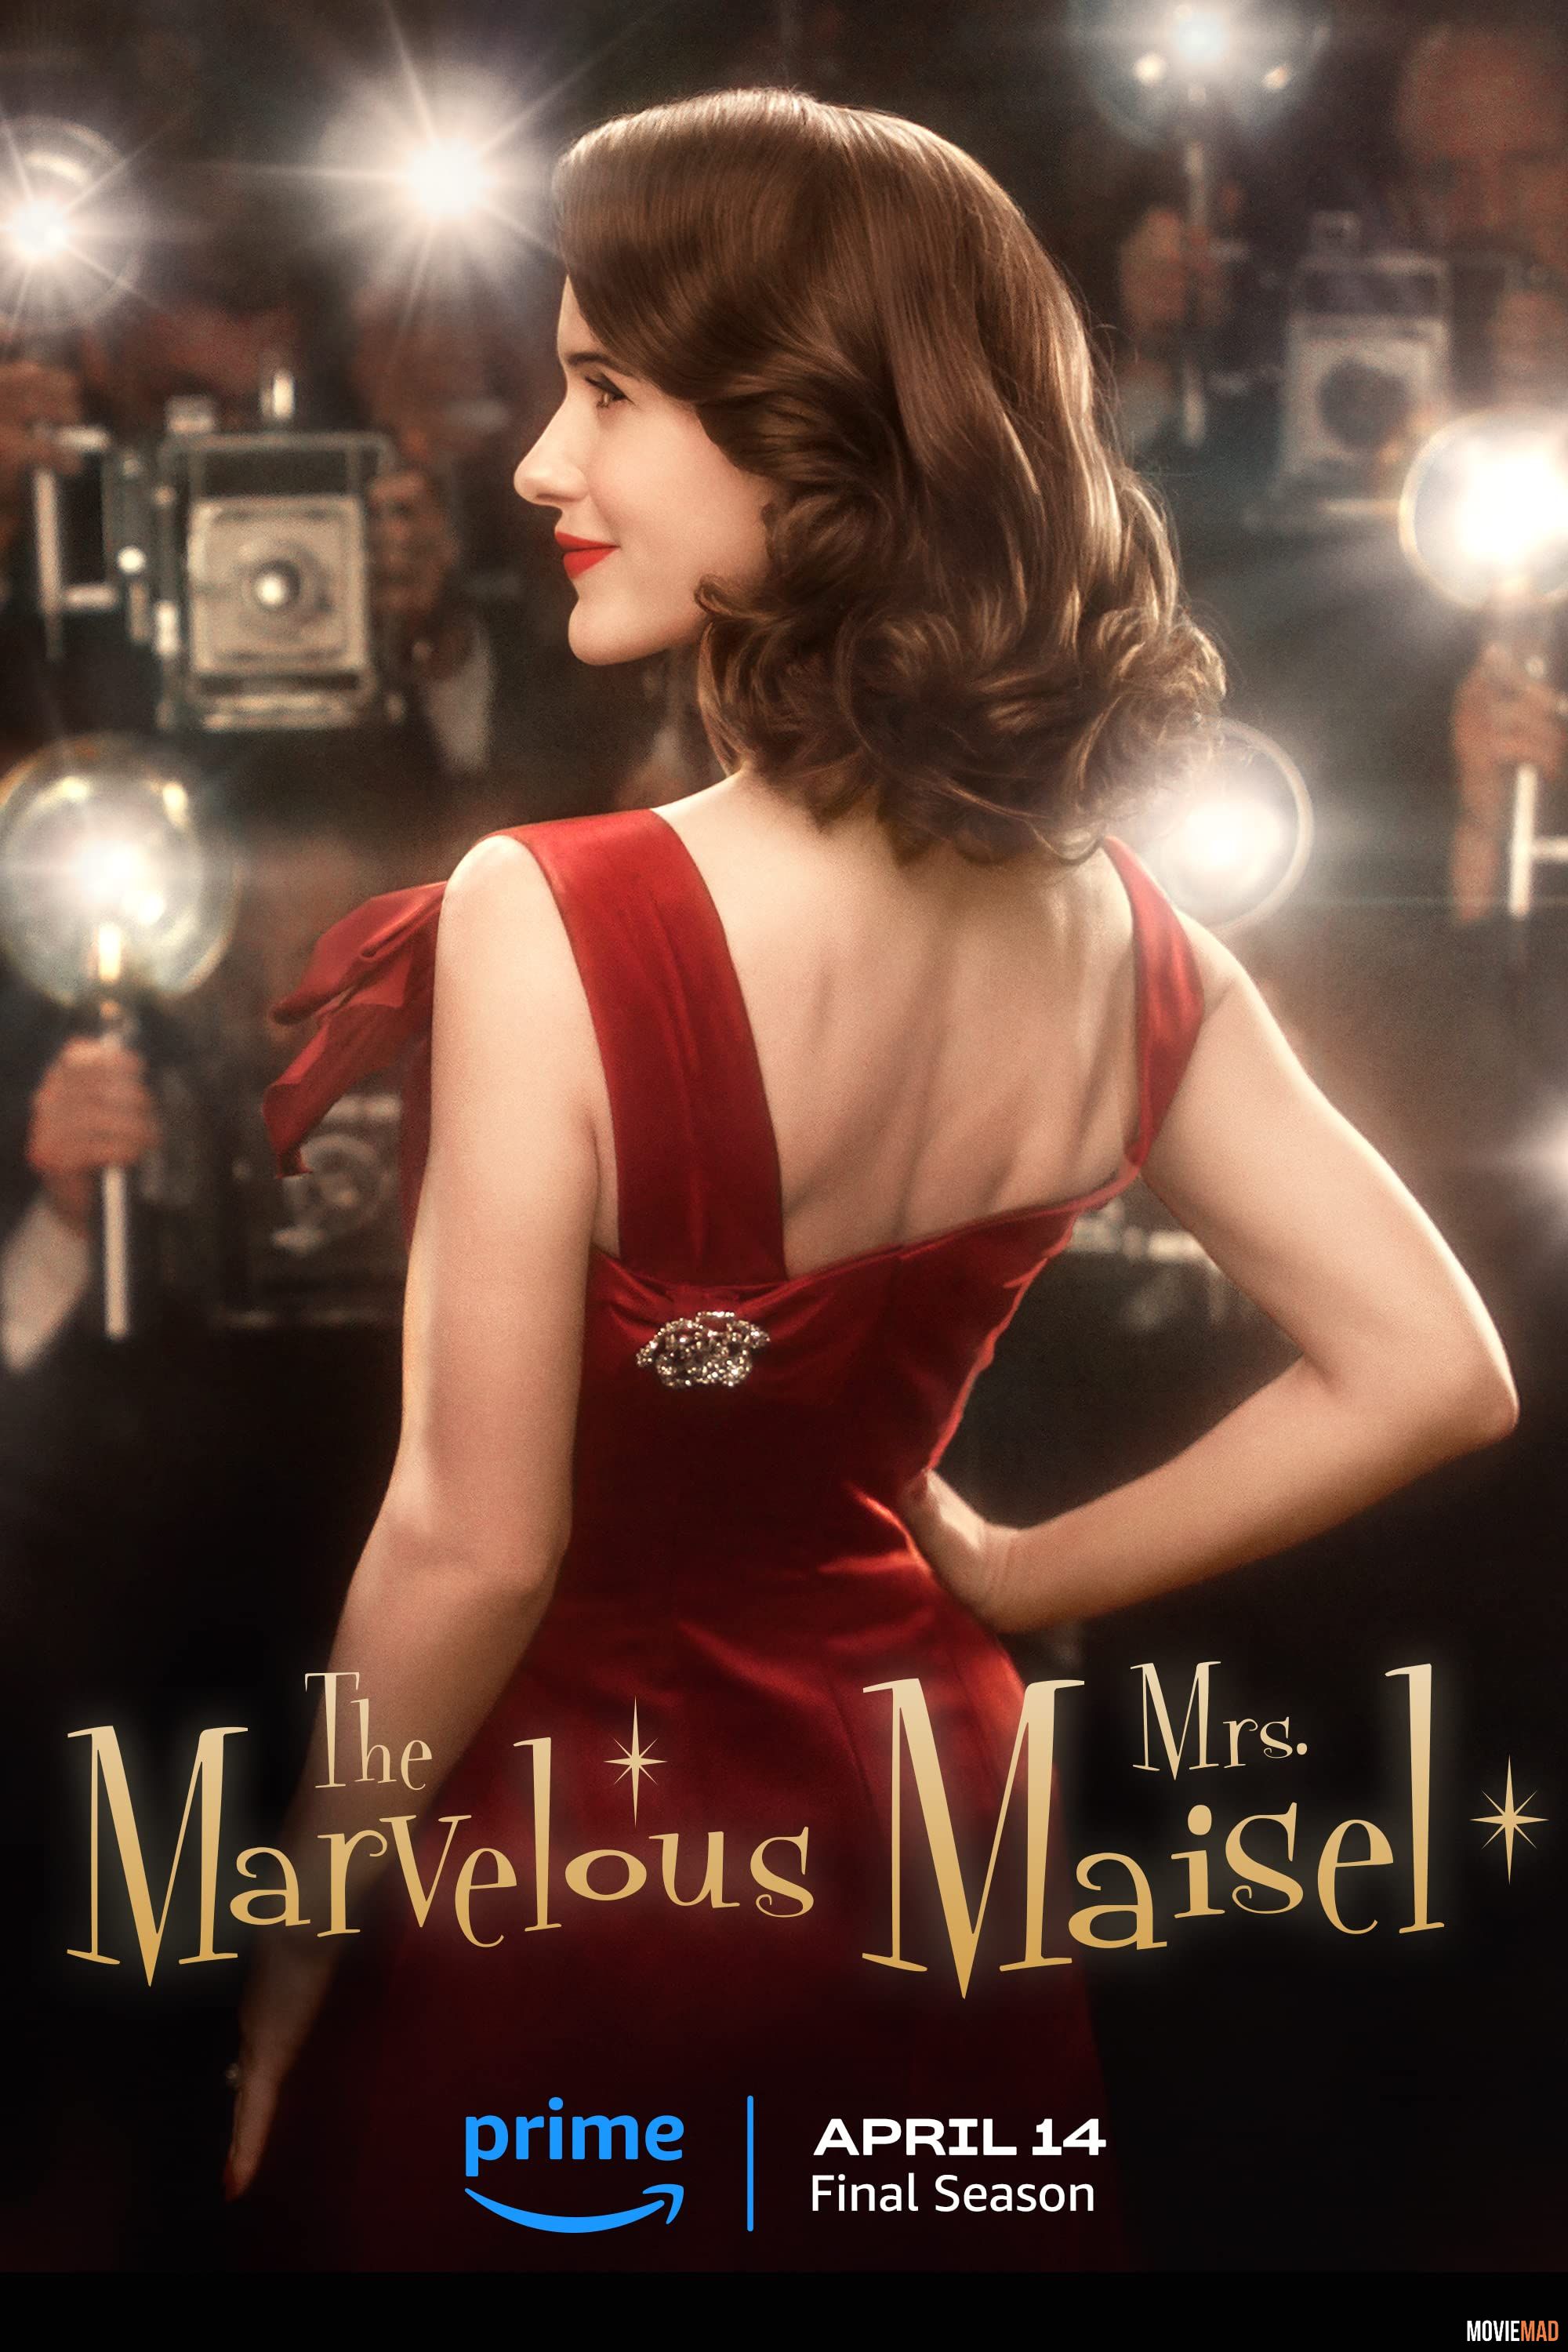 full moviesThe Marvelous Mrs Maisel (Season1) Hindi Dubbed Complete Web Series Prime Video HDRip 720p 480p